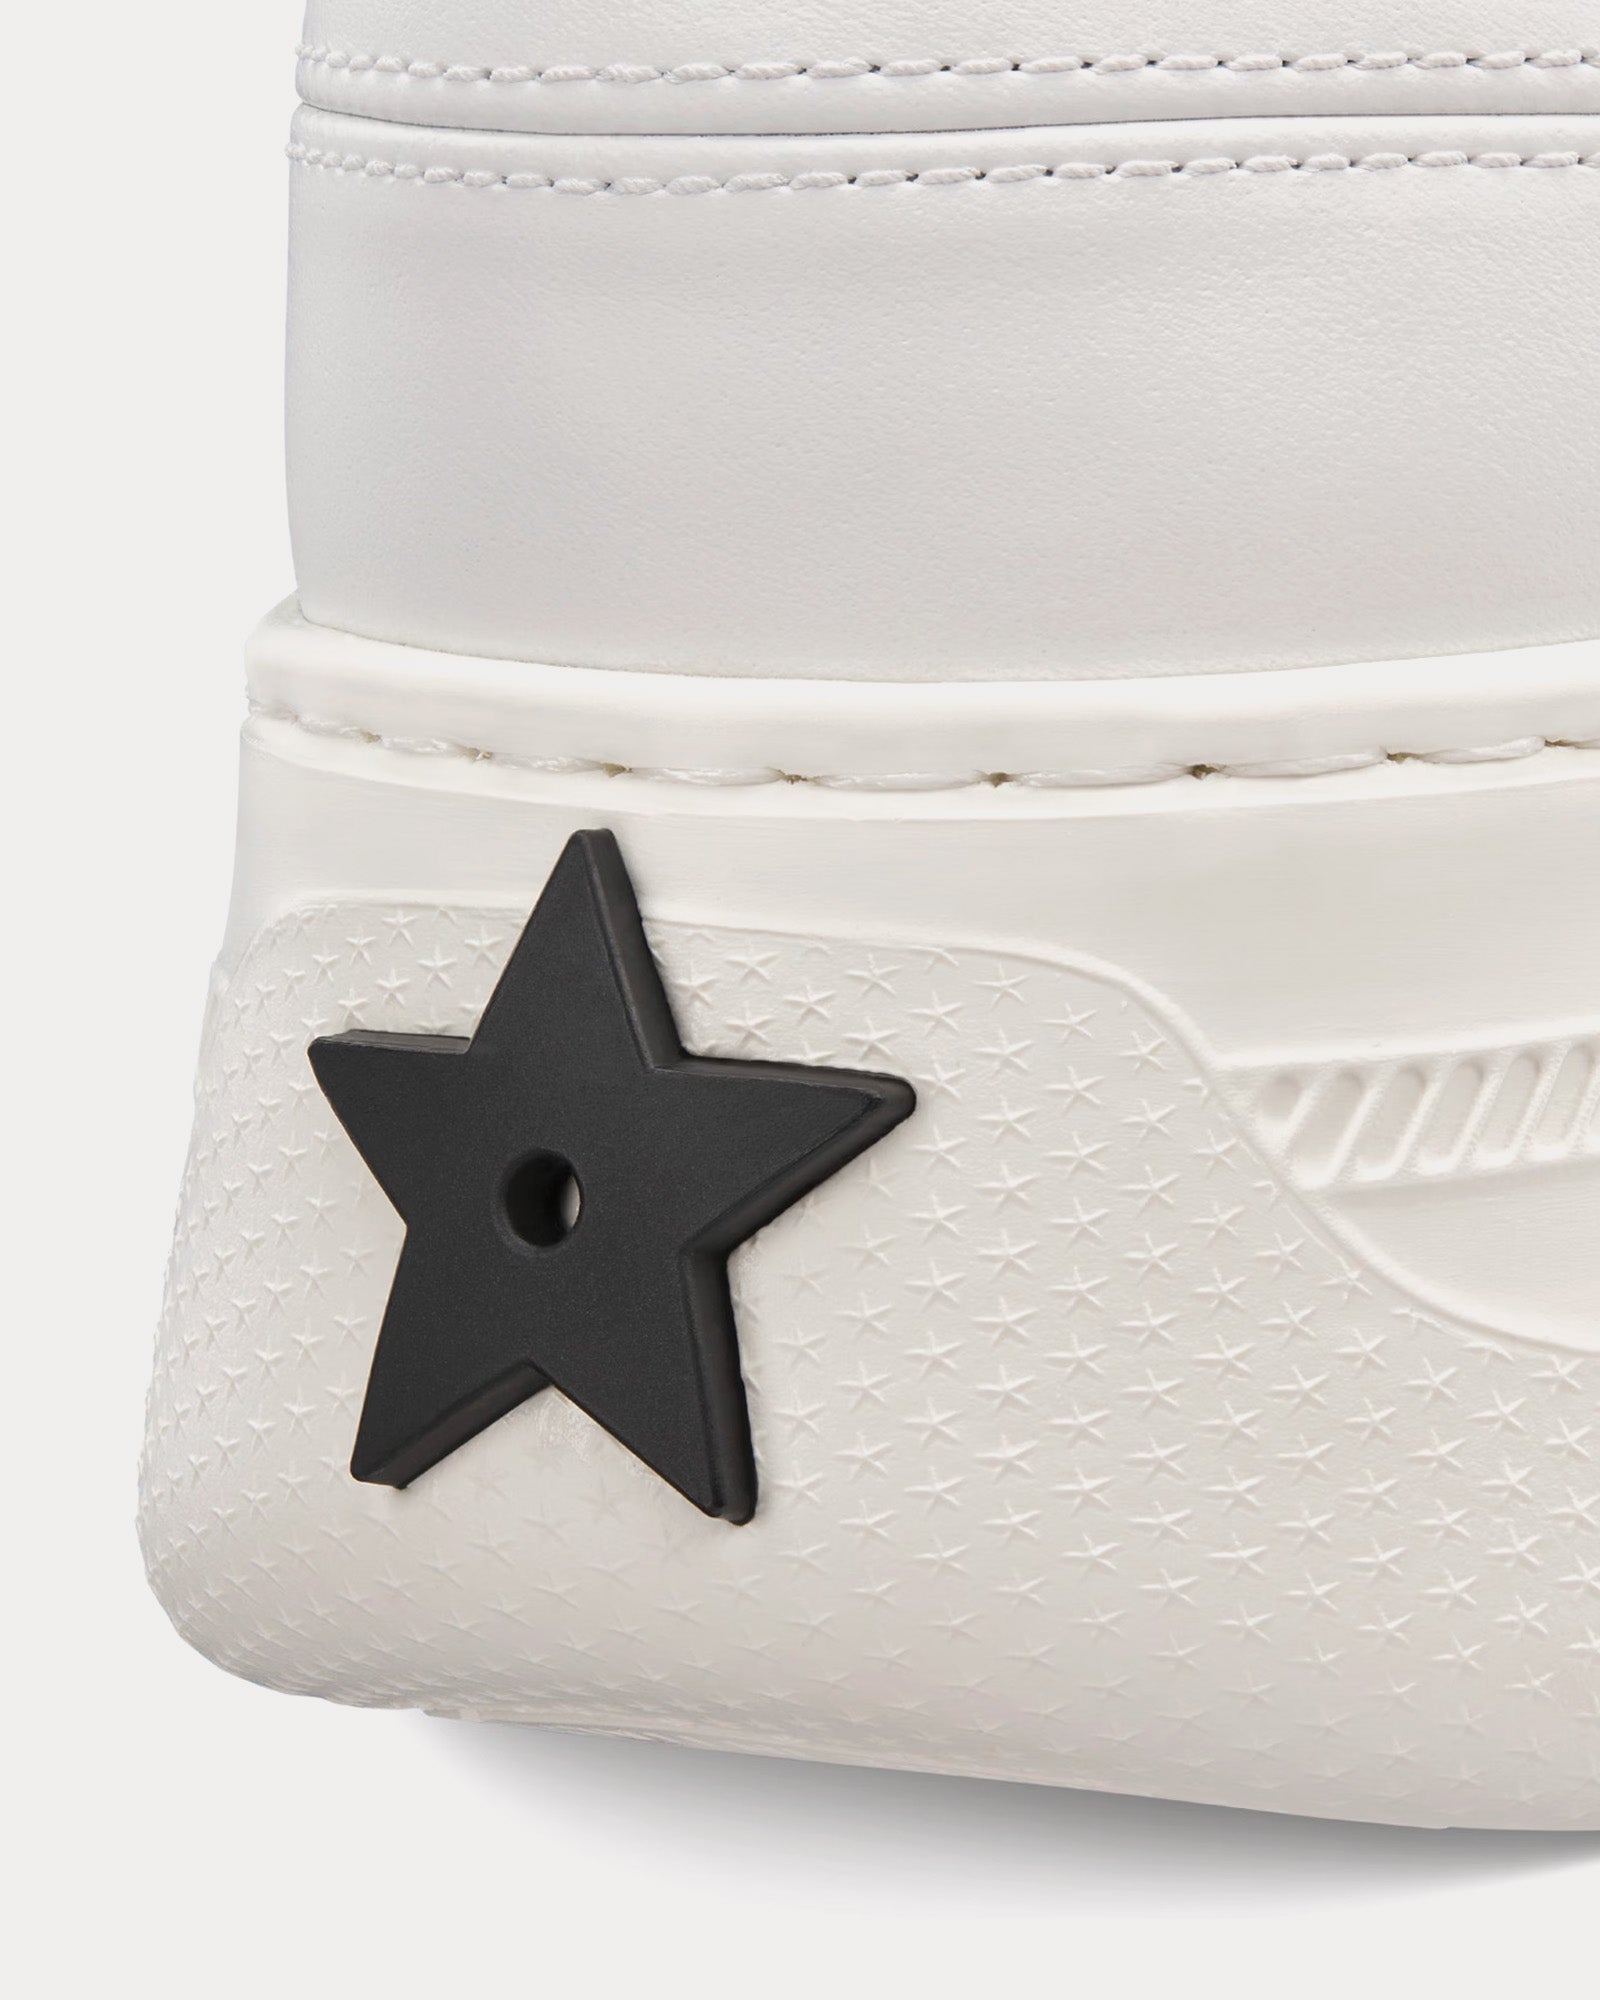 Dior - Dior Star Platform Calfskin & Suede White / Black Low Top Sneakers